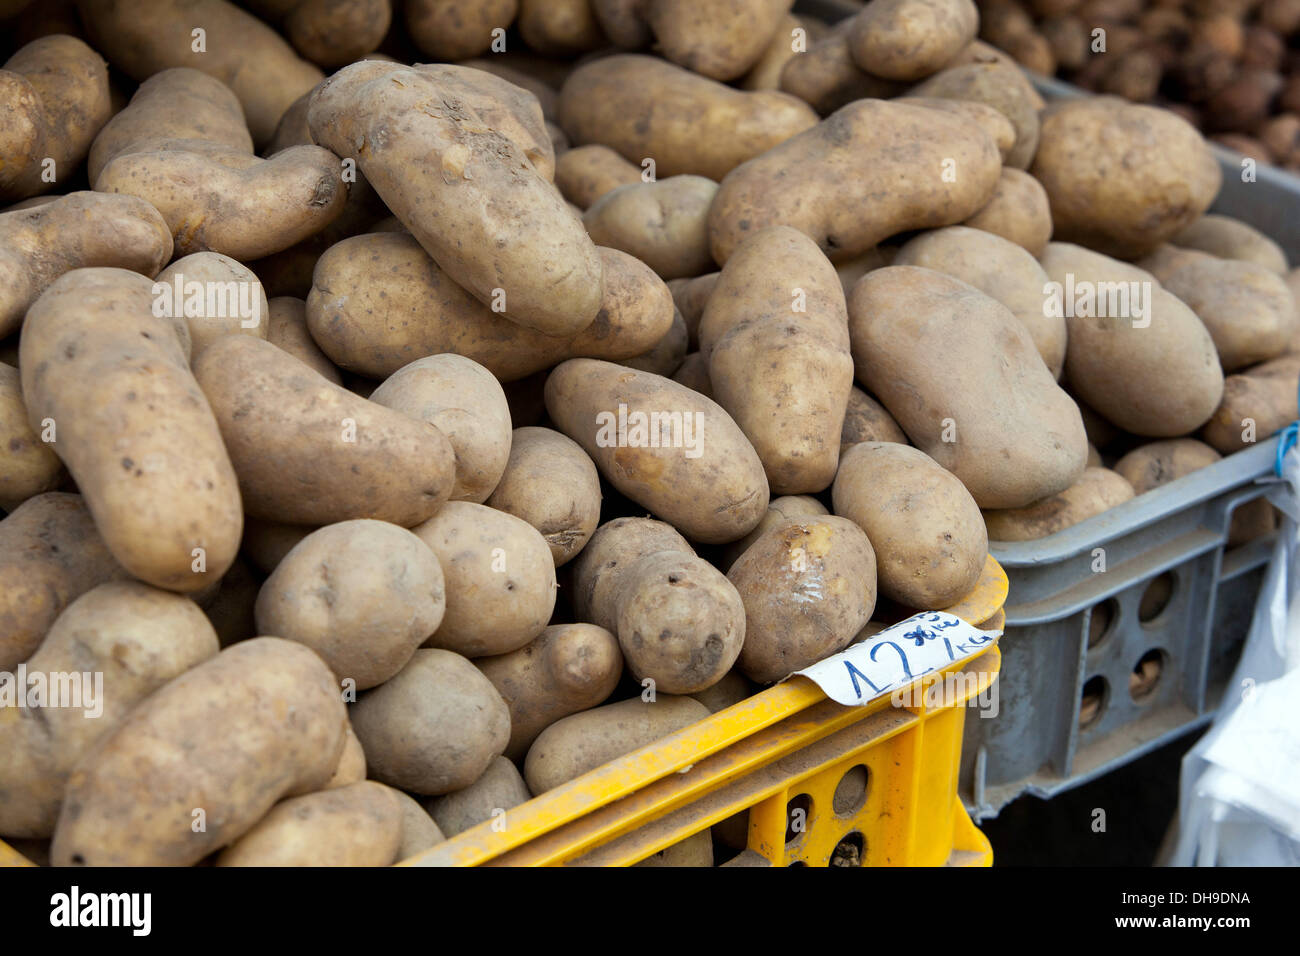 Street vendita di patate nel cestino, vendita di patate Foto Stock